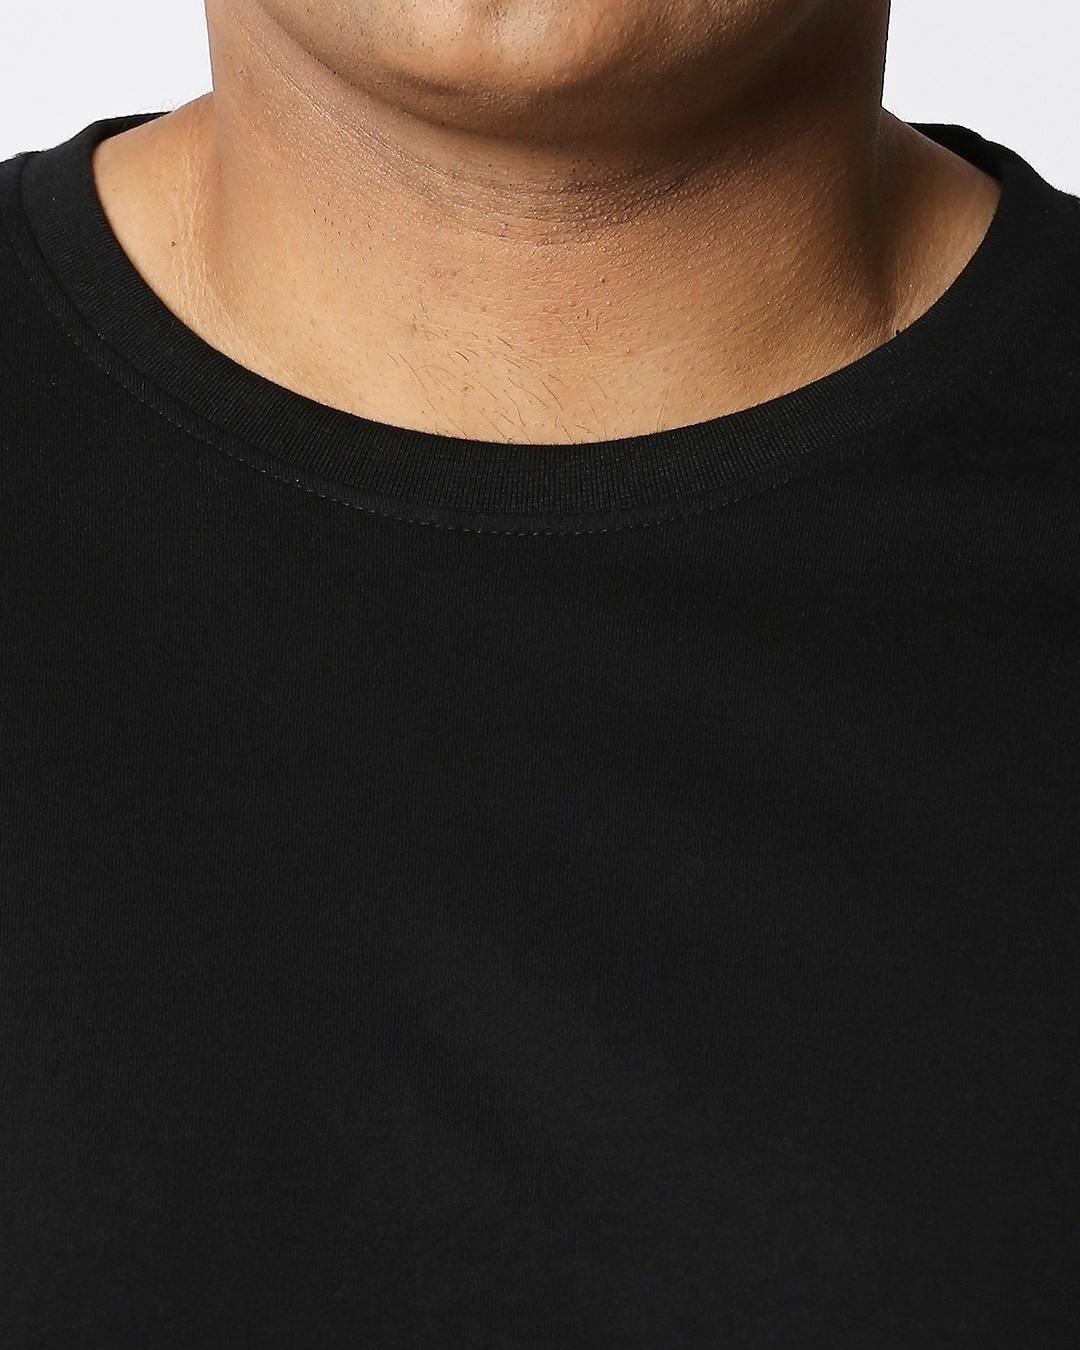 Shop Black Plus Size Half Sleeve Organic Cotton T-Shirt